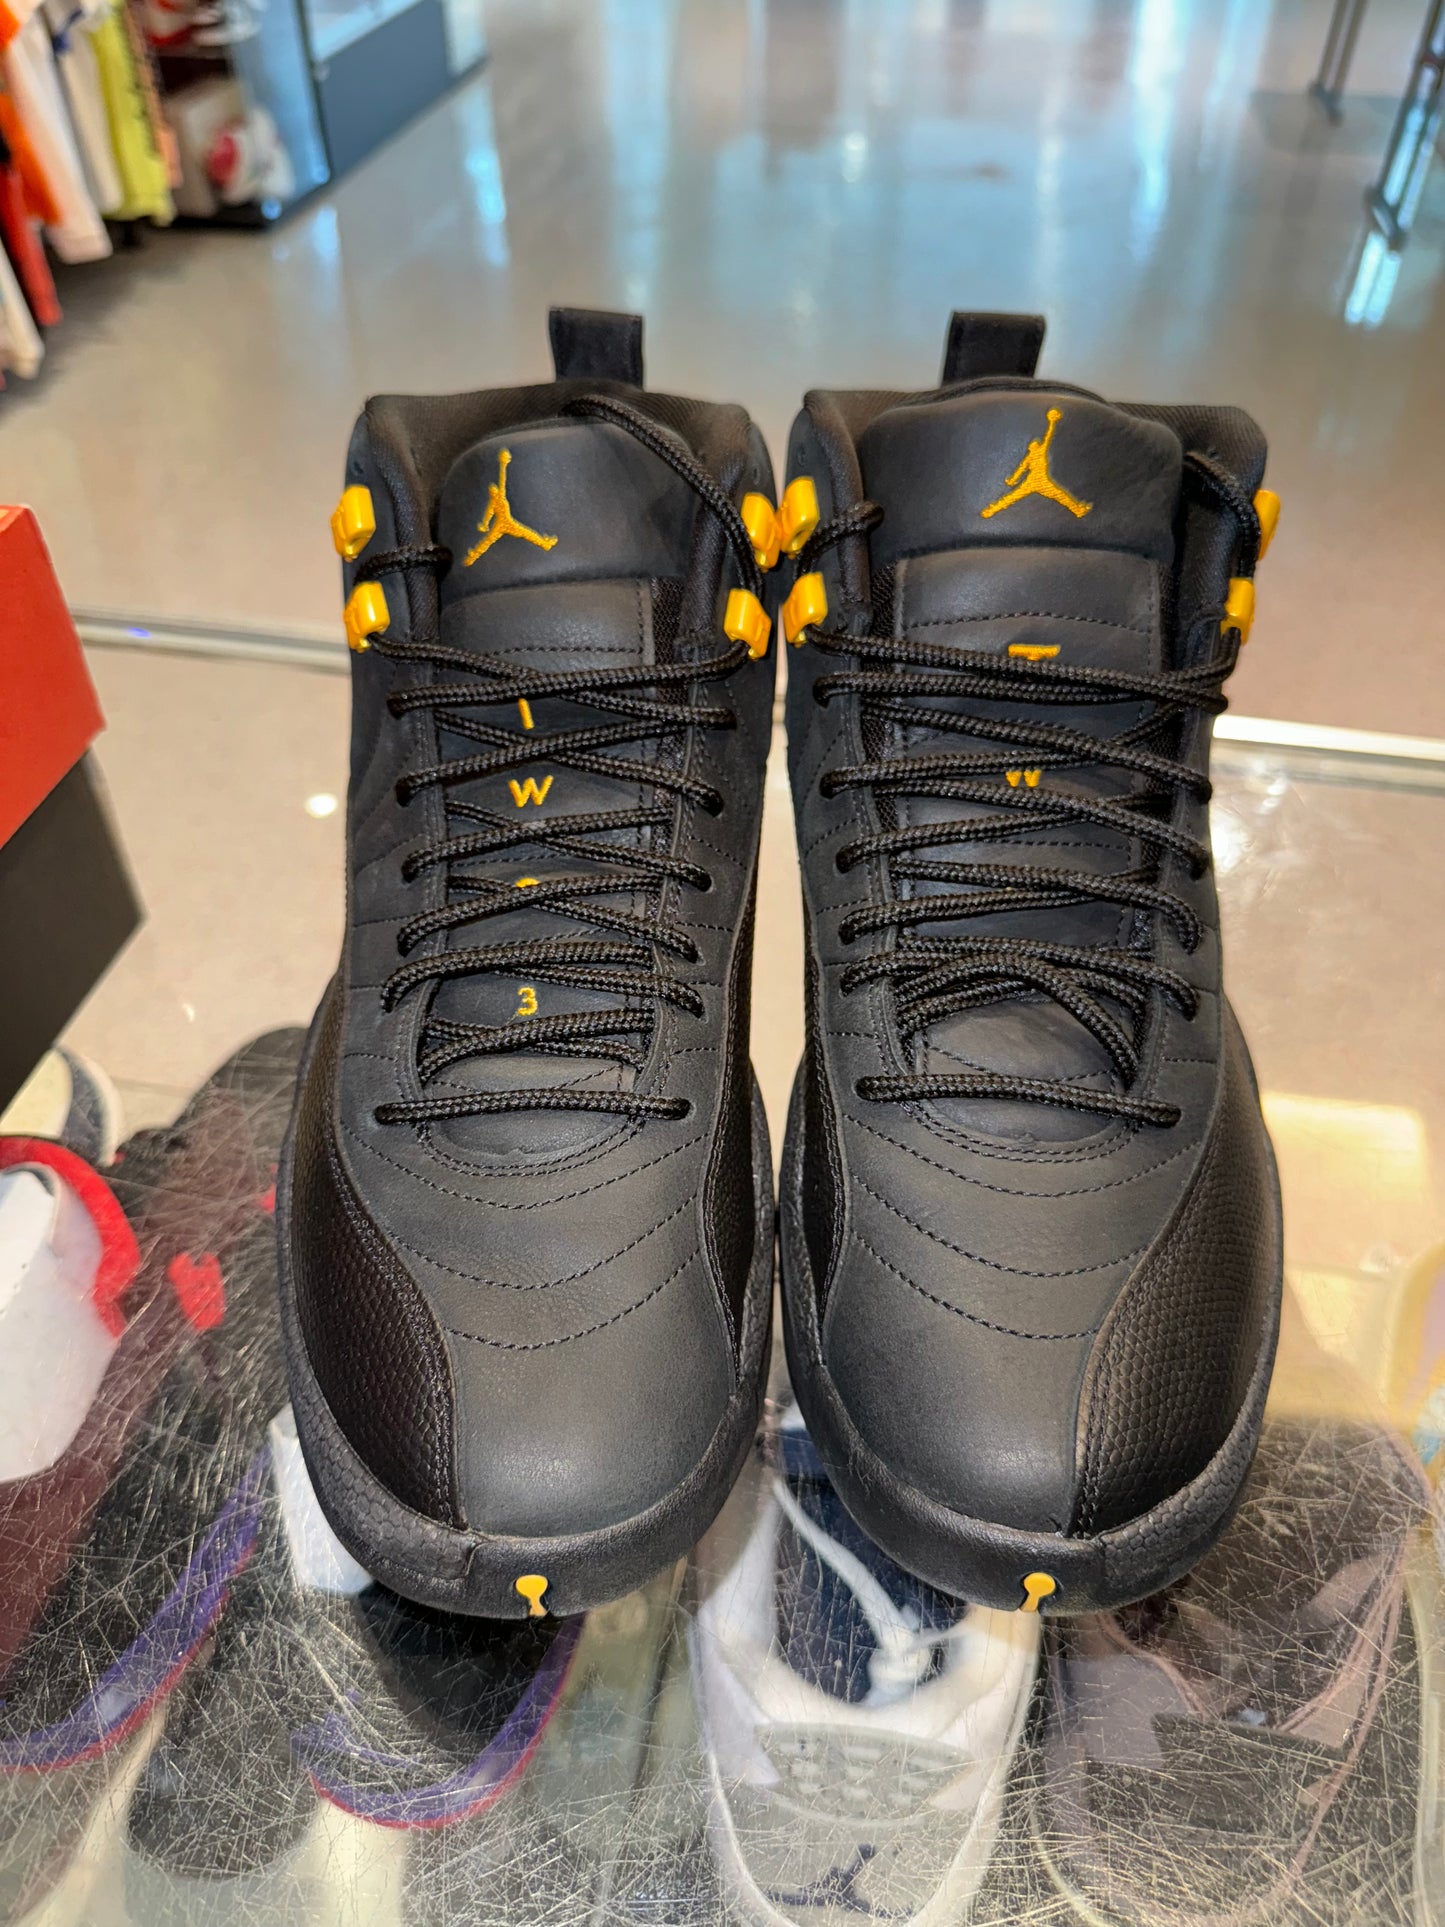 Size 11.5 Air Jordan 12 “Black Taxi” (Mall)